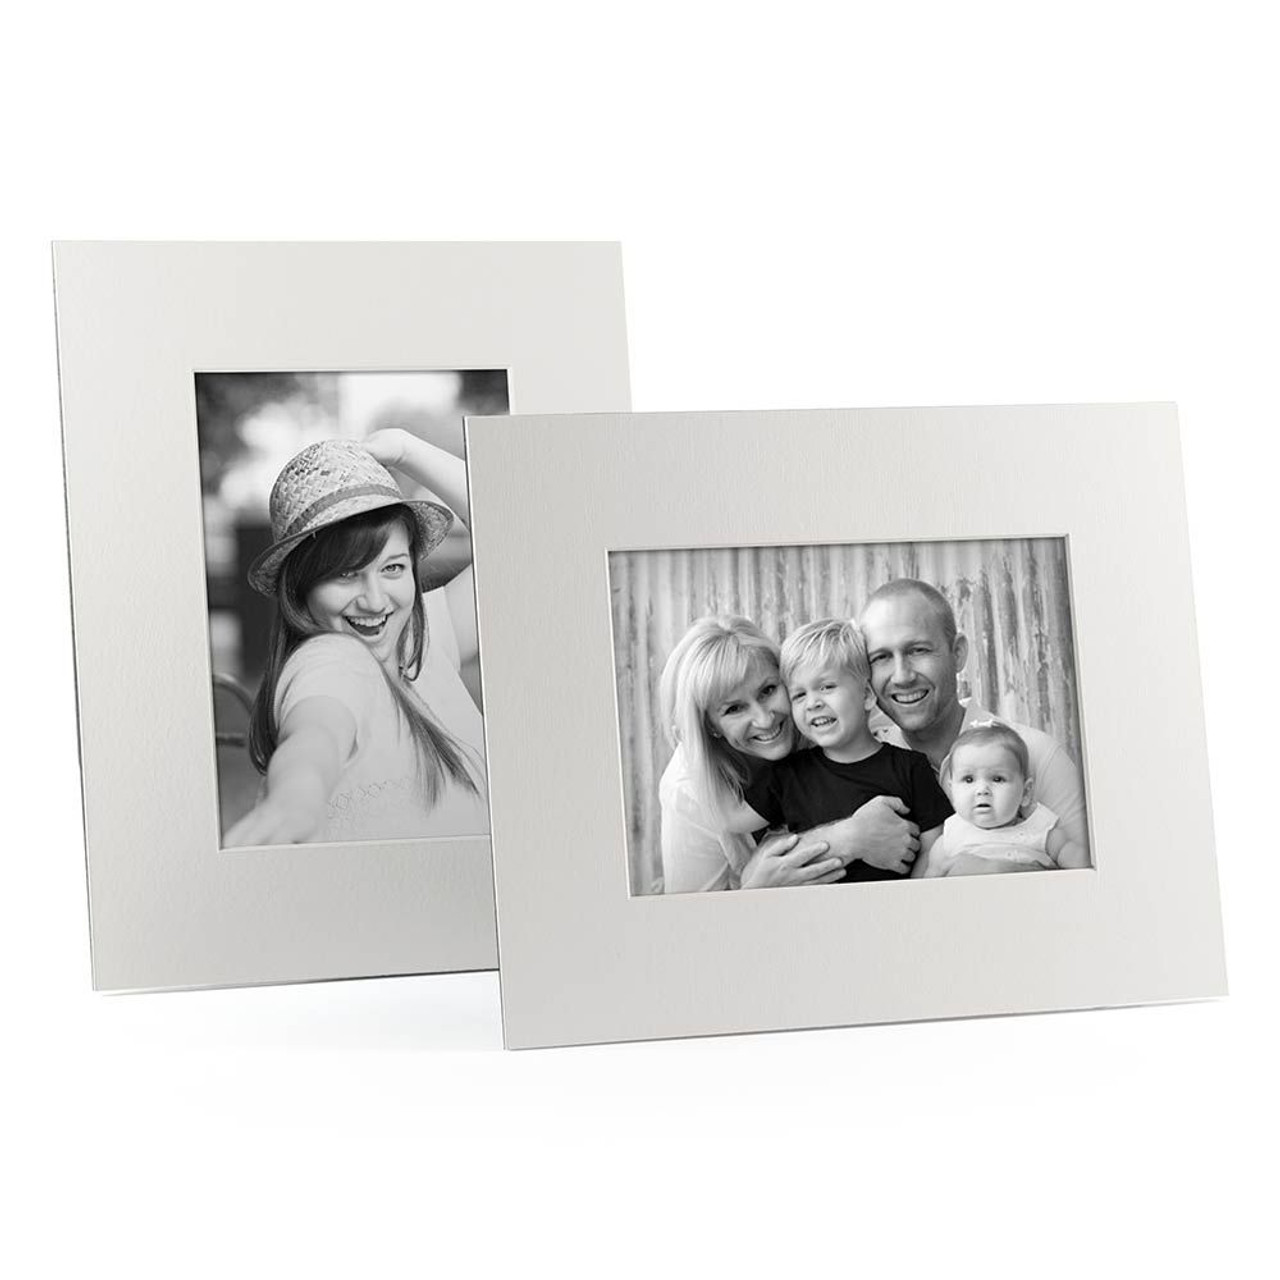 White Cardboard Photo Frame for 4x6, 5x7